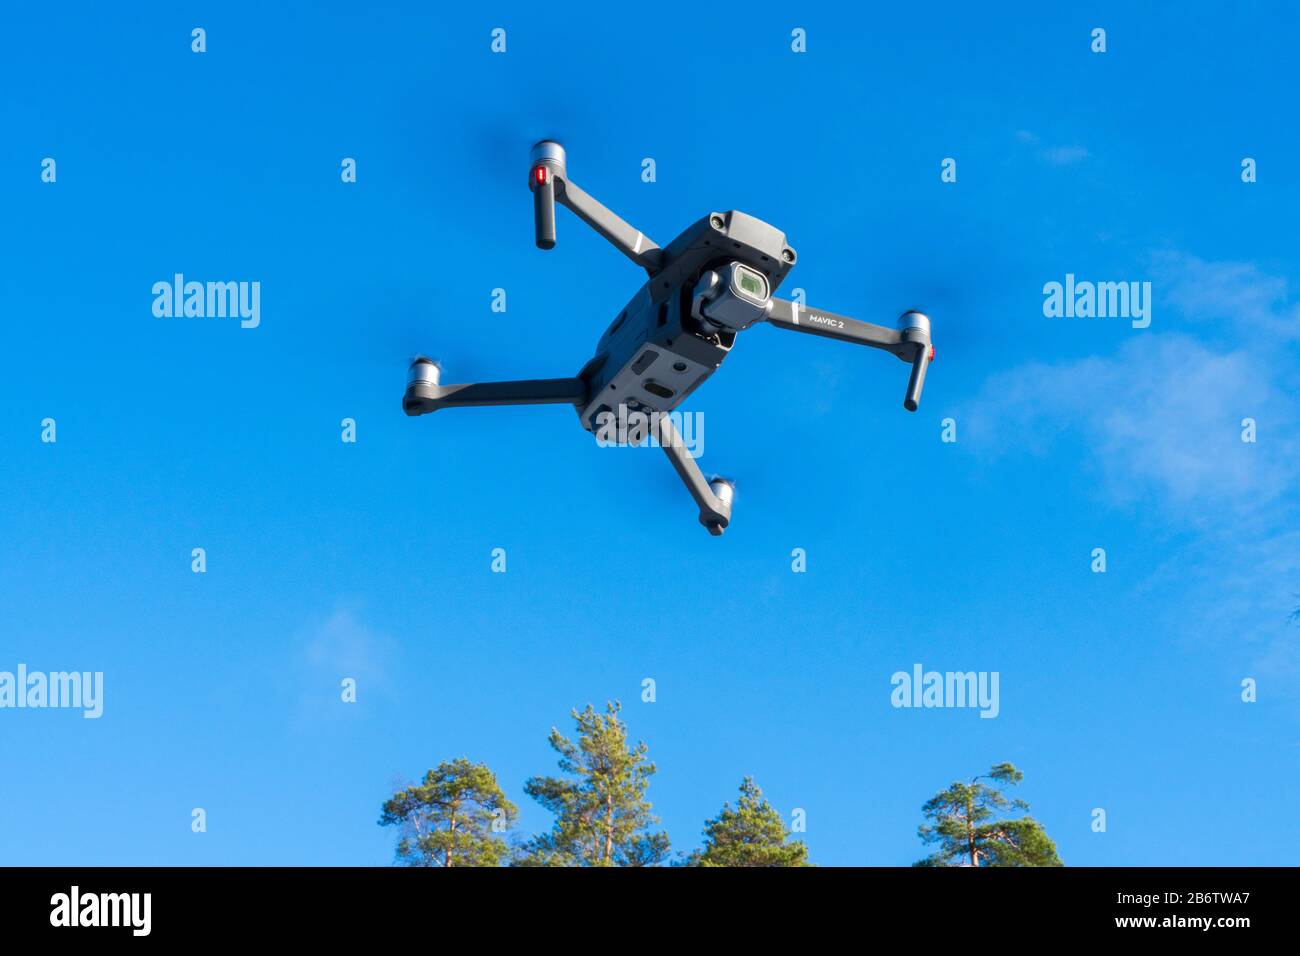 Sankt-Petersburg, Russland, 20. Februar 2020: DJI Mavic 2 probt über blauem Himmel. DJI Mavic 2 Pro Quadcopter oder Drohne, die in hellblauem Himmel schwallt Stockfoto